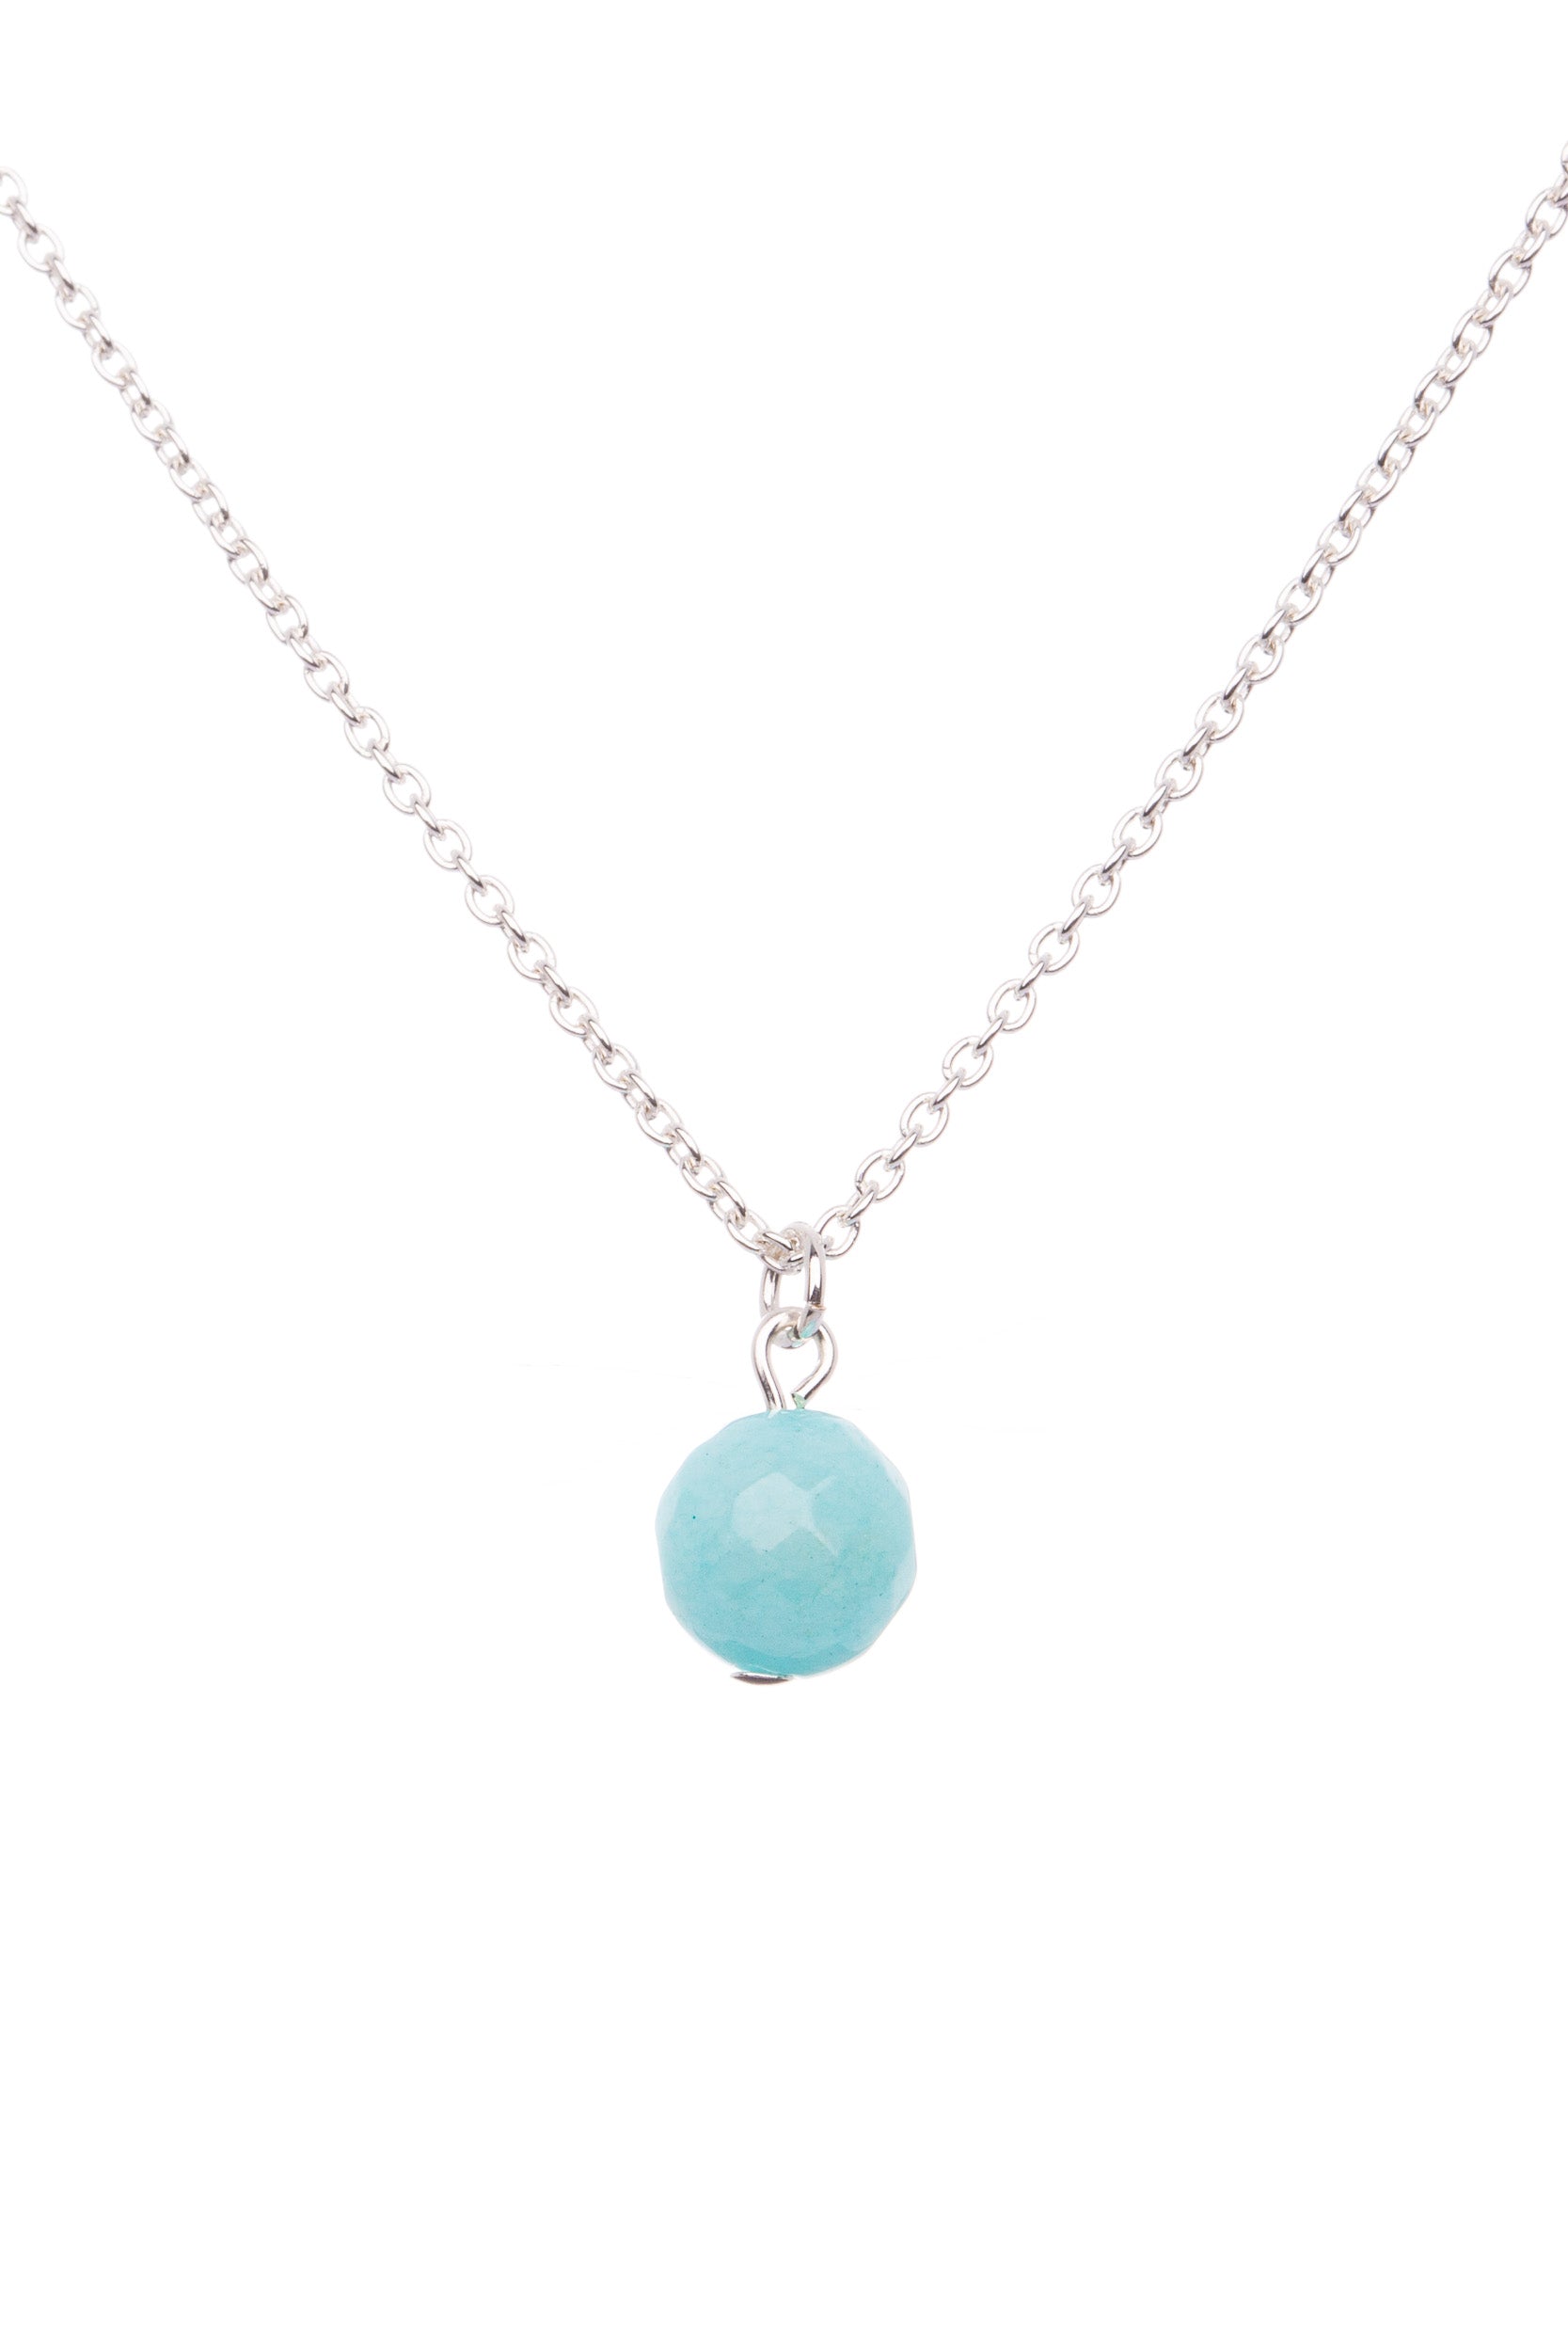 Tiffany & Co. Elsa Peretti Aquamarine 16mm Open Heart Silver Necklace, RRP  £635 | eBay